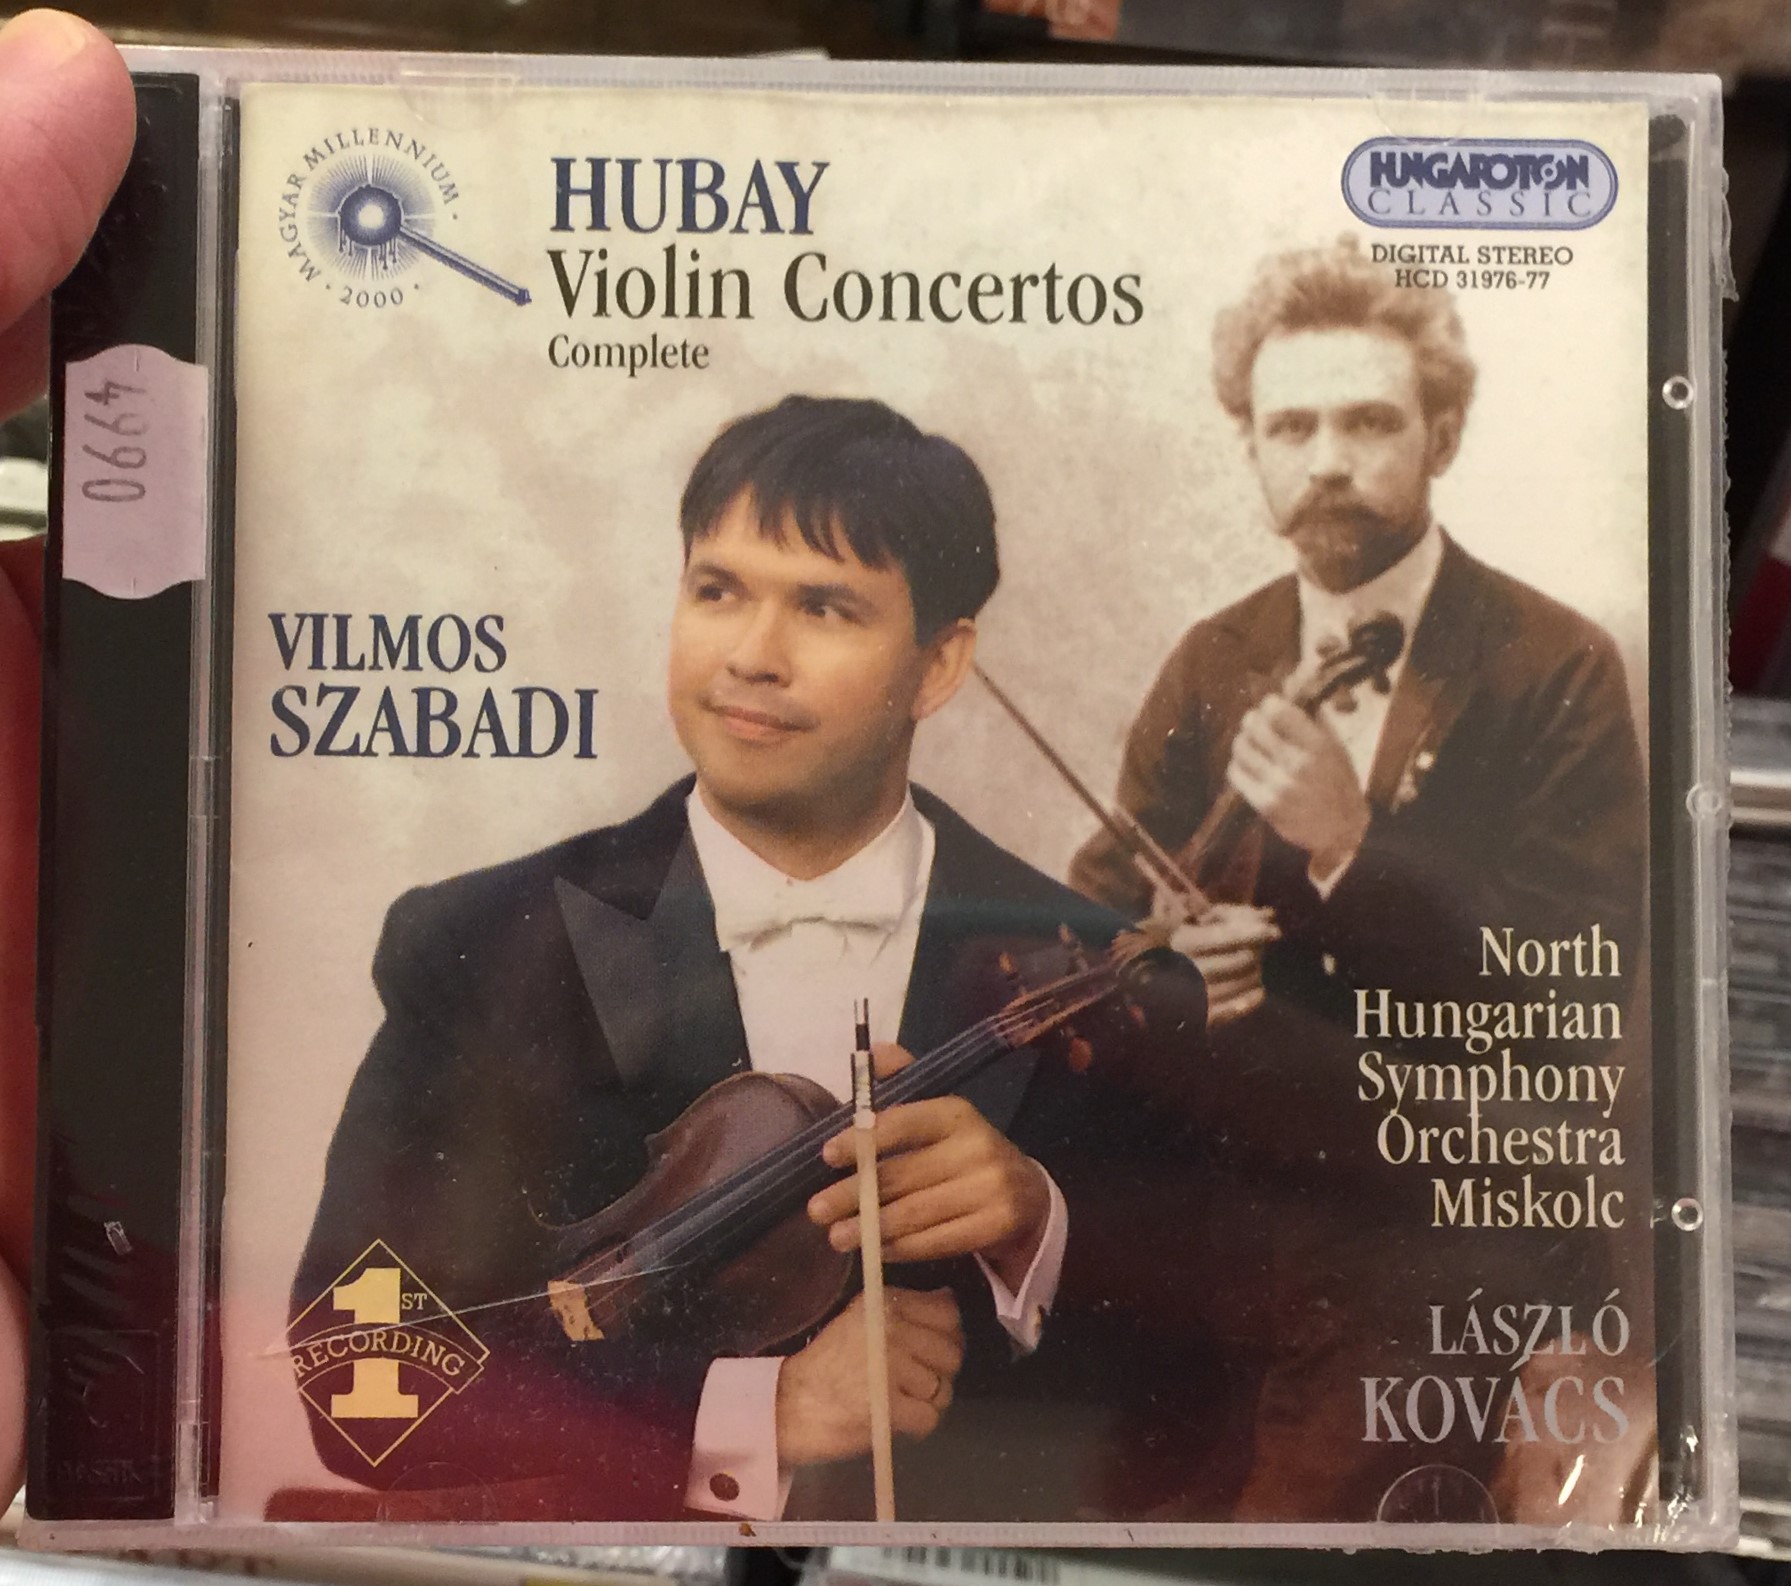 hubay-violin-concertos-complete-vilmos-szabadi-north-hungarian-symphony-orchestra-miskolc.-laszlo-kovacs-hungaroton-classic-2x-audio-cd-2001-stereo-hcd-31976-77-1-.jpg